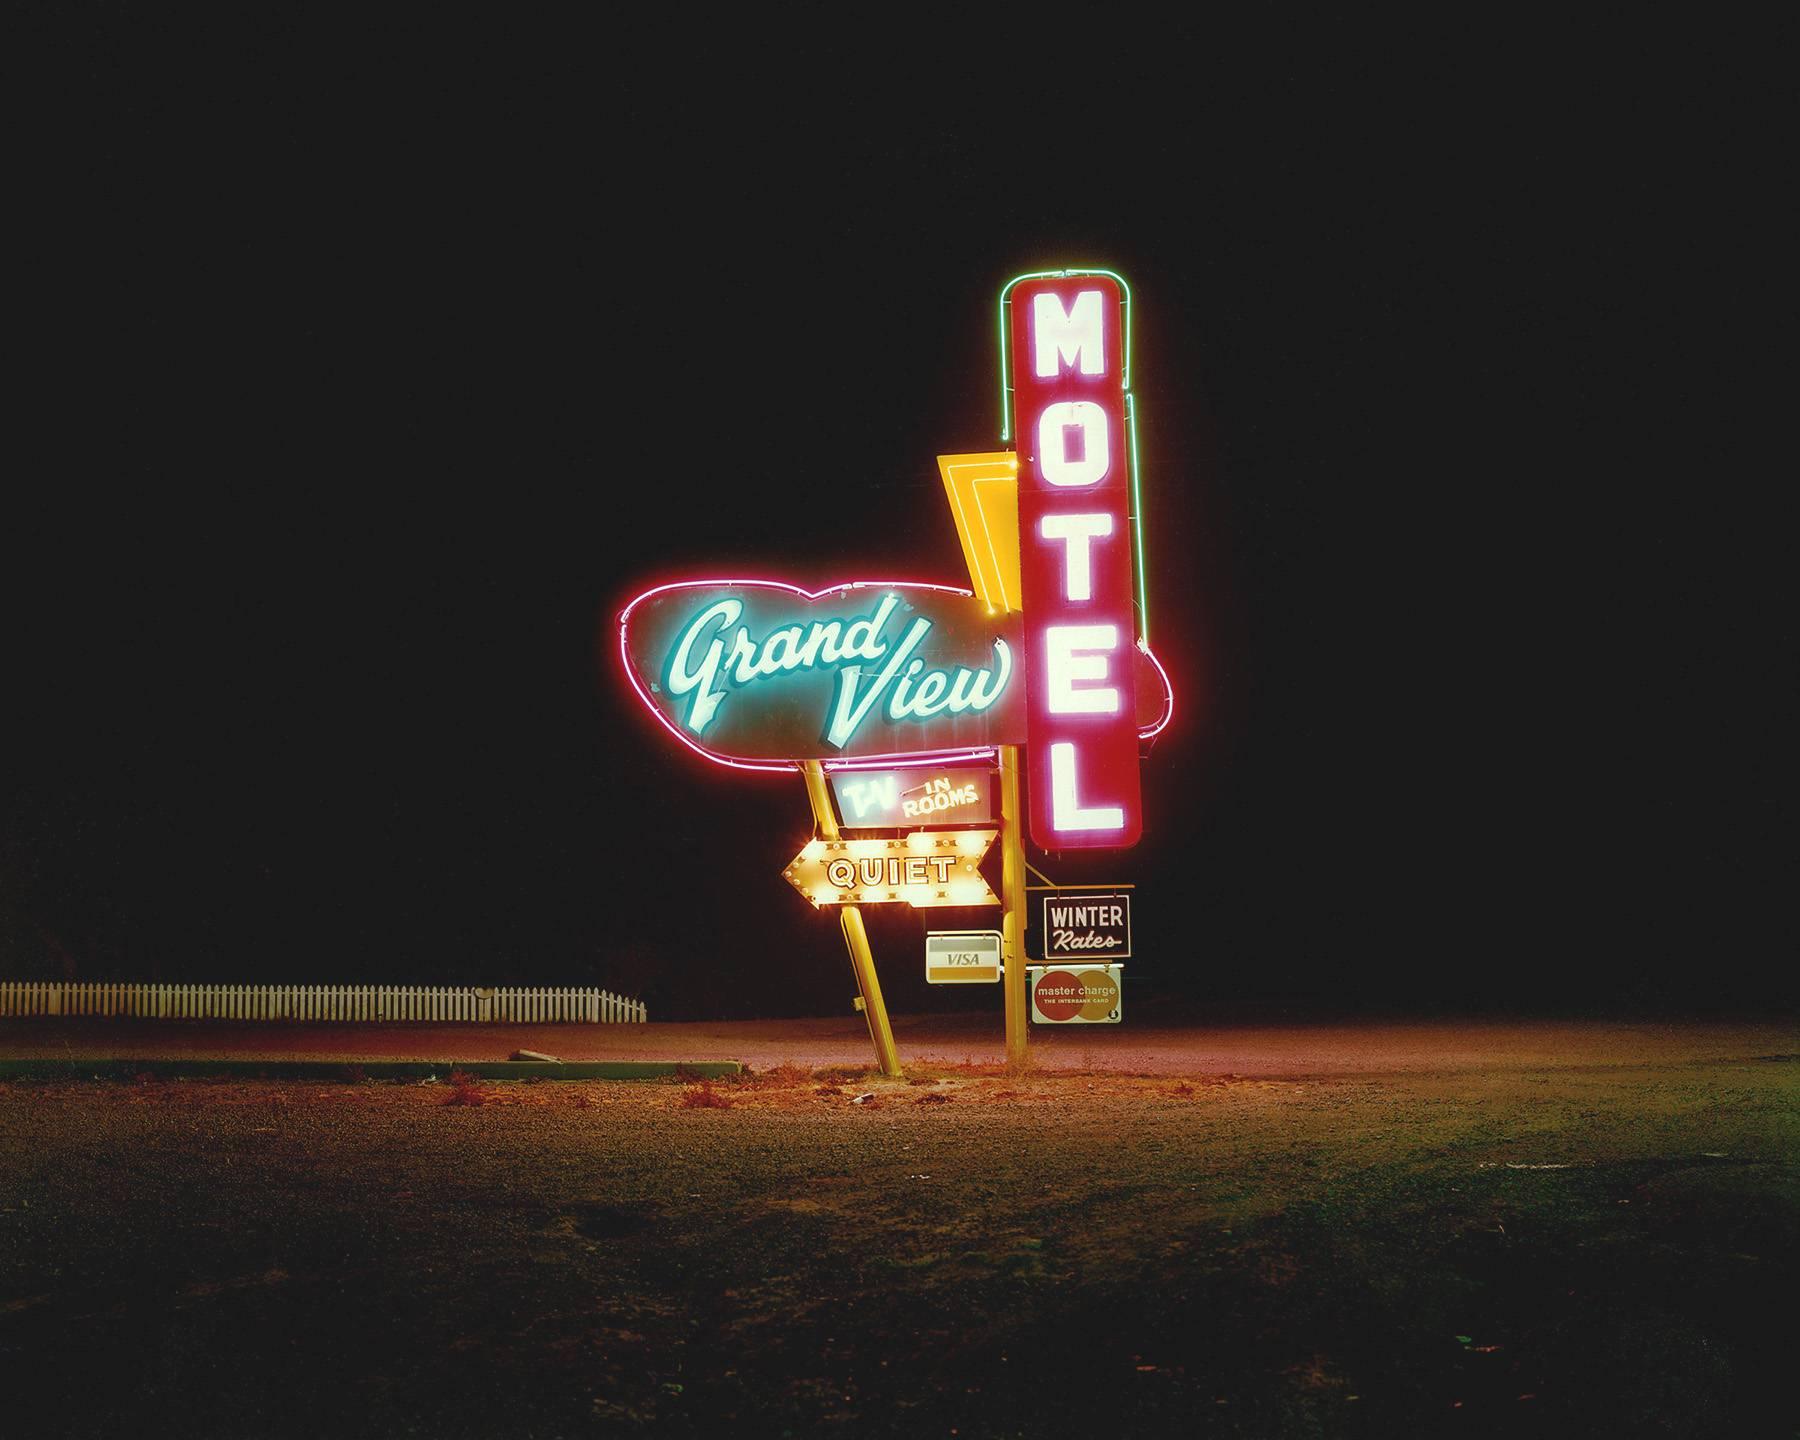 Steve Fitch Landscape Photograph - Grandview Motel, Raton, New Mexico; December 18, 1980